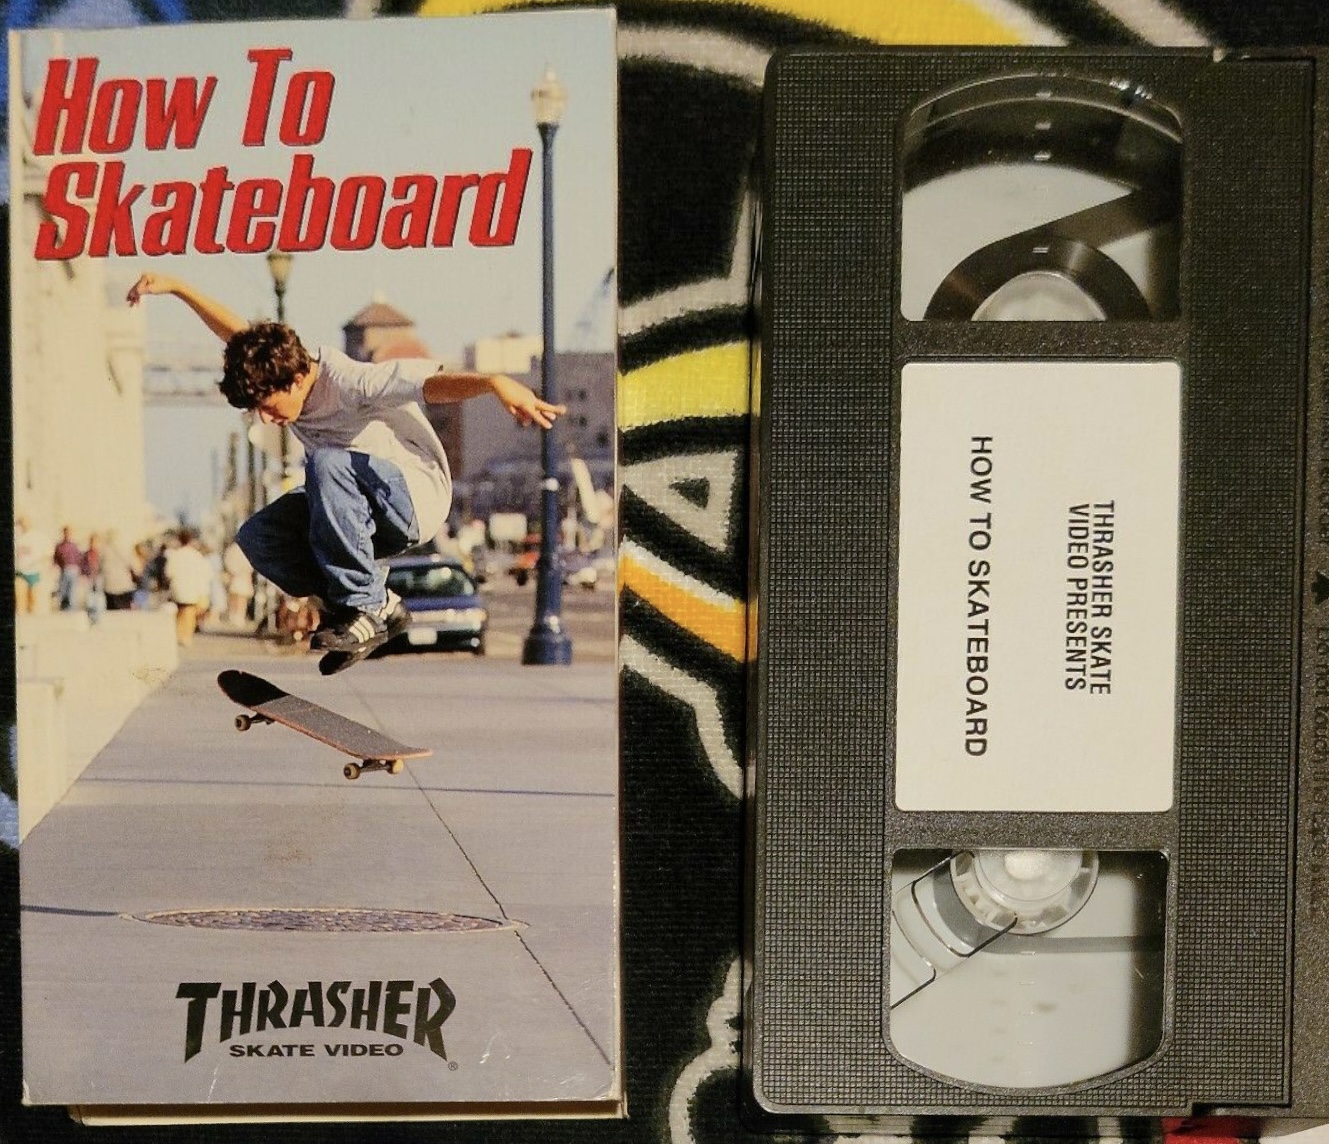 Thrasher - How To Skateboard cover